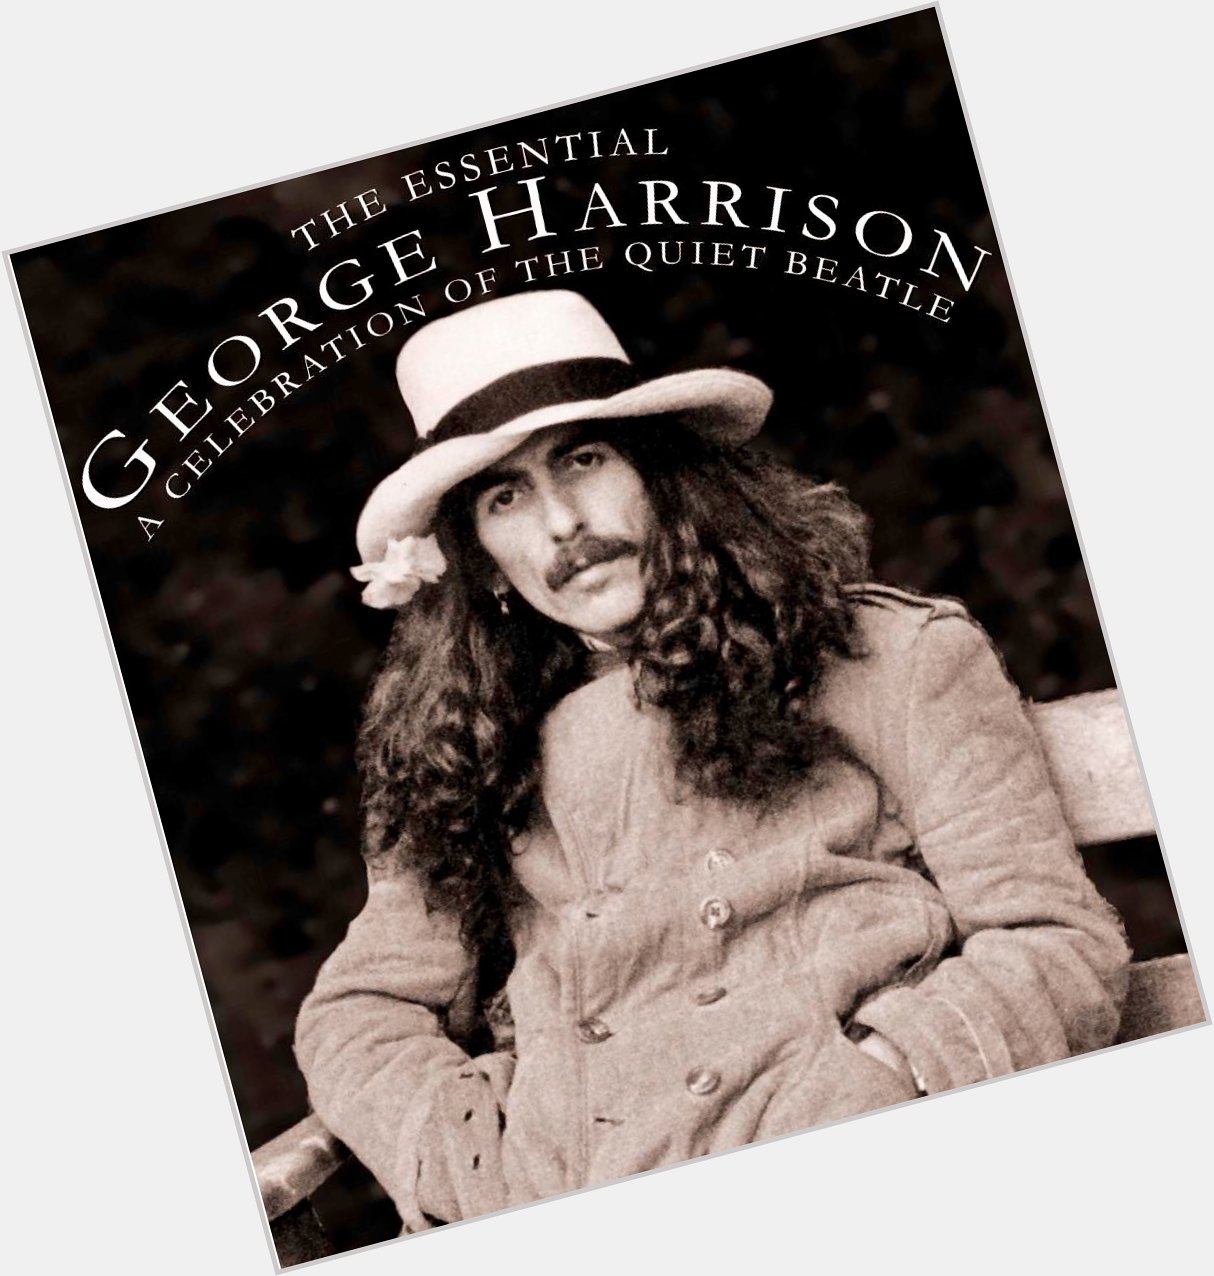 Happy birthday to George Harrison. 